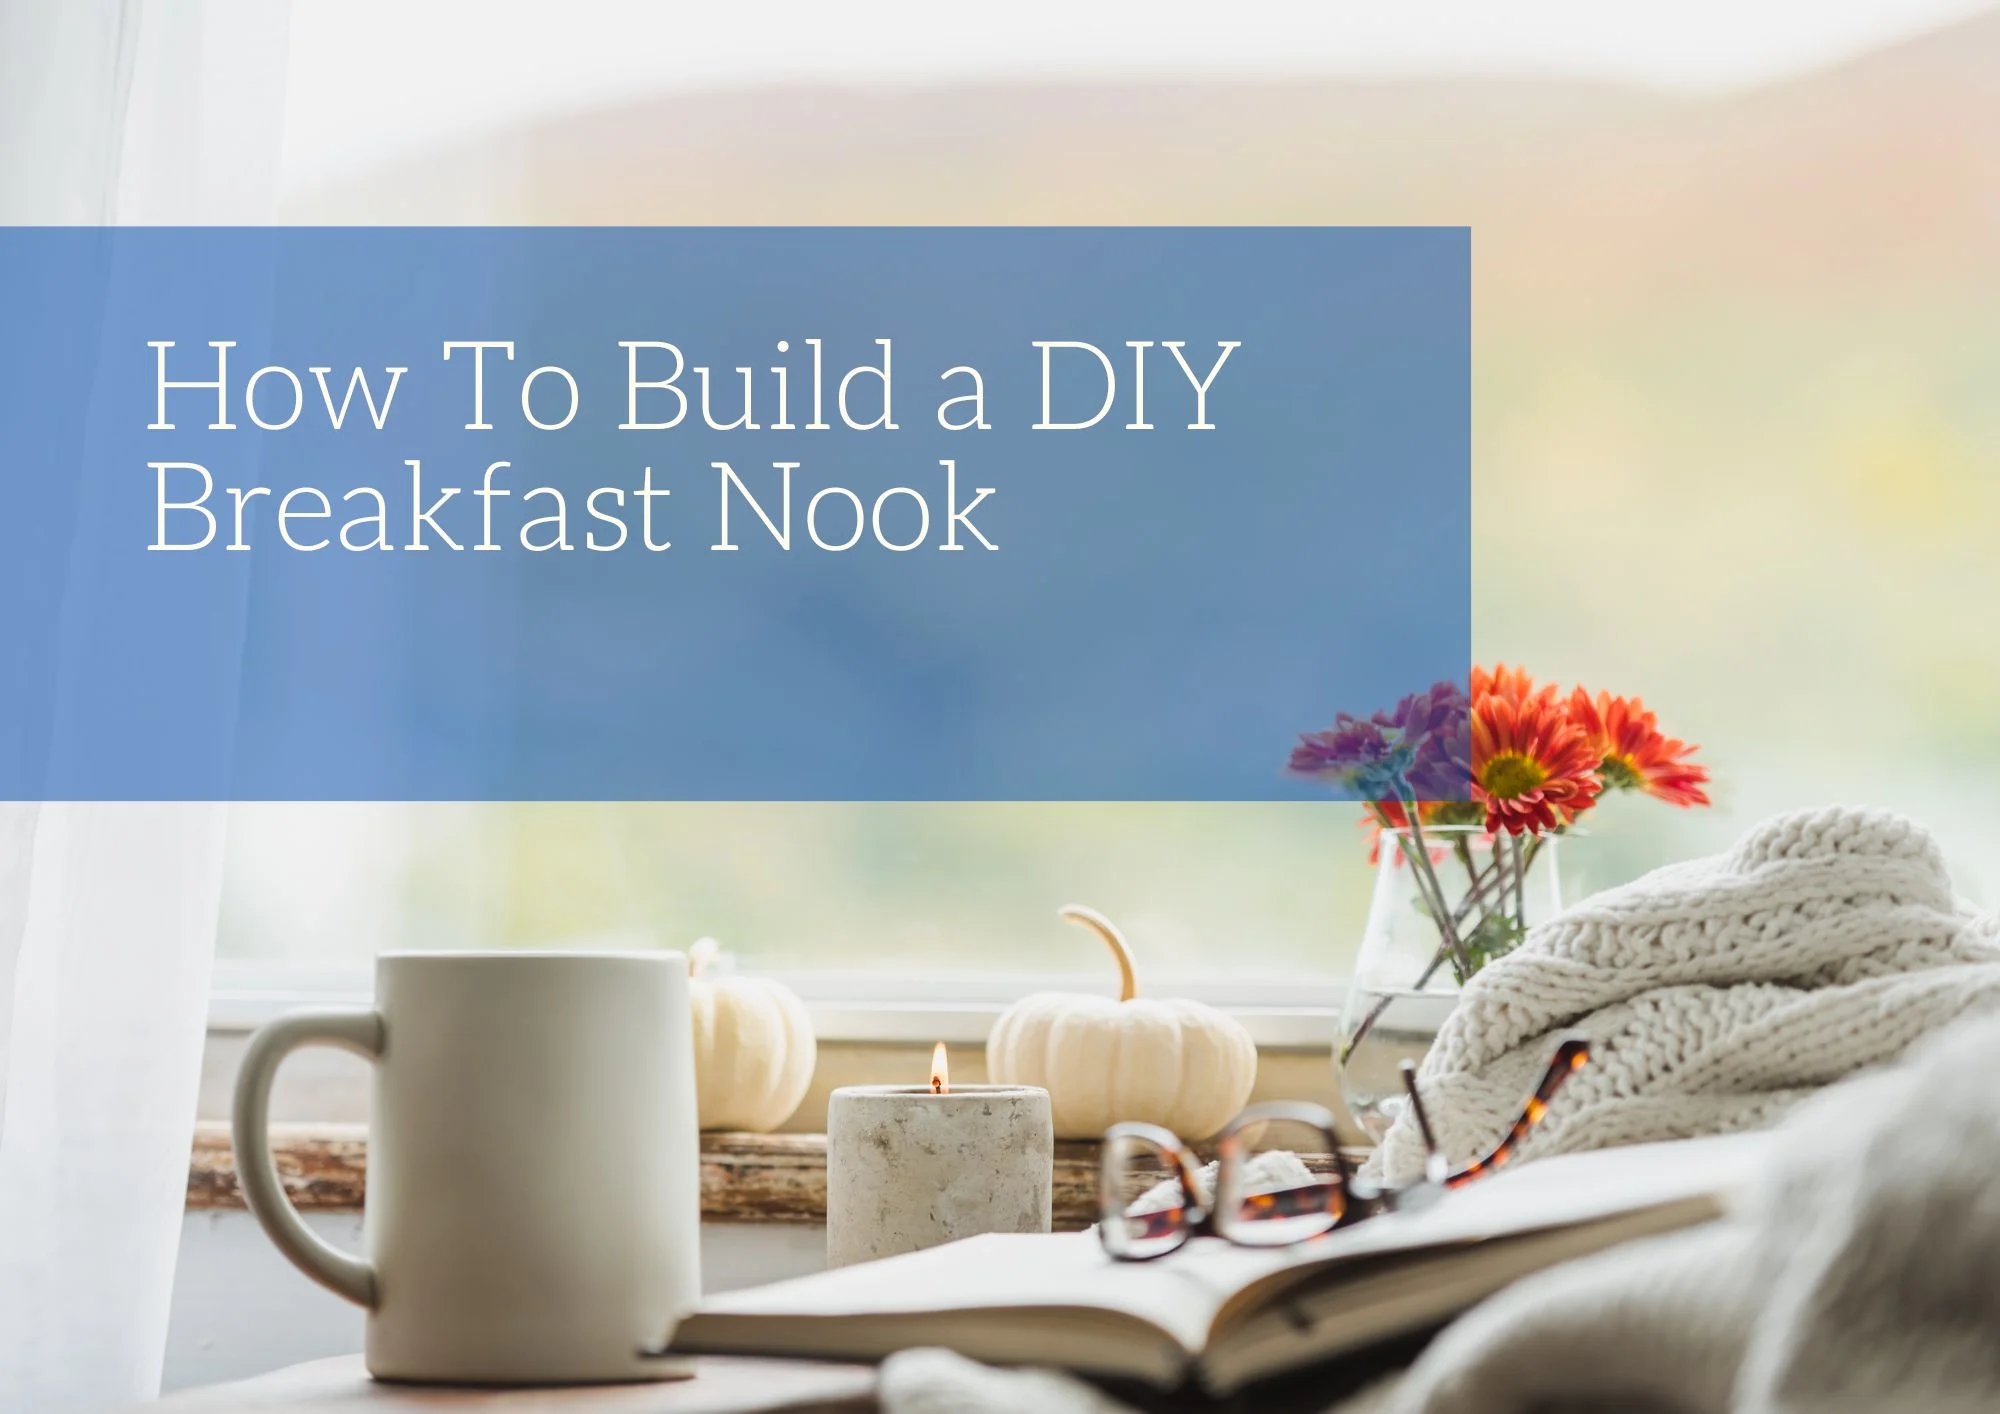 How To Build a DIY Breakfast Nook